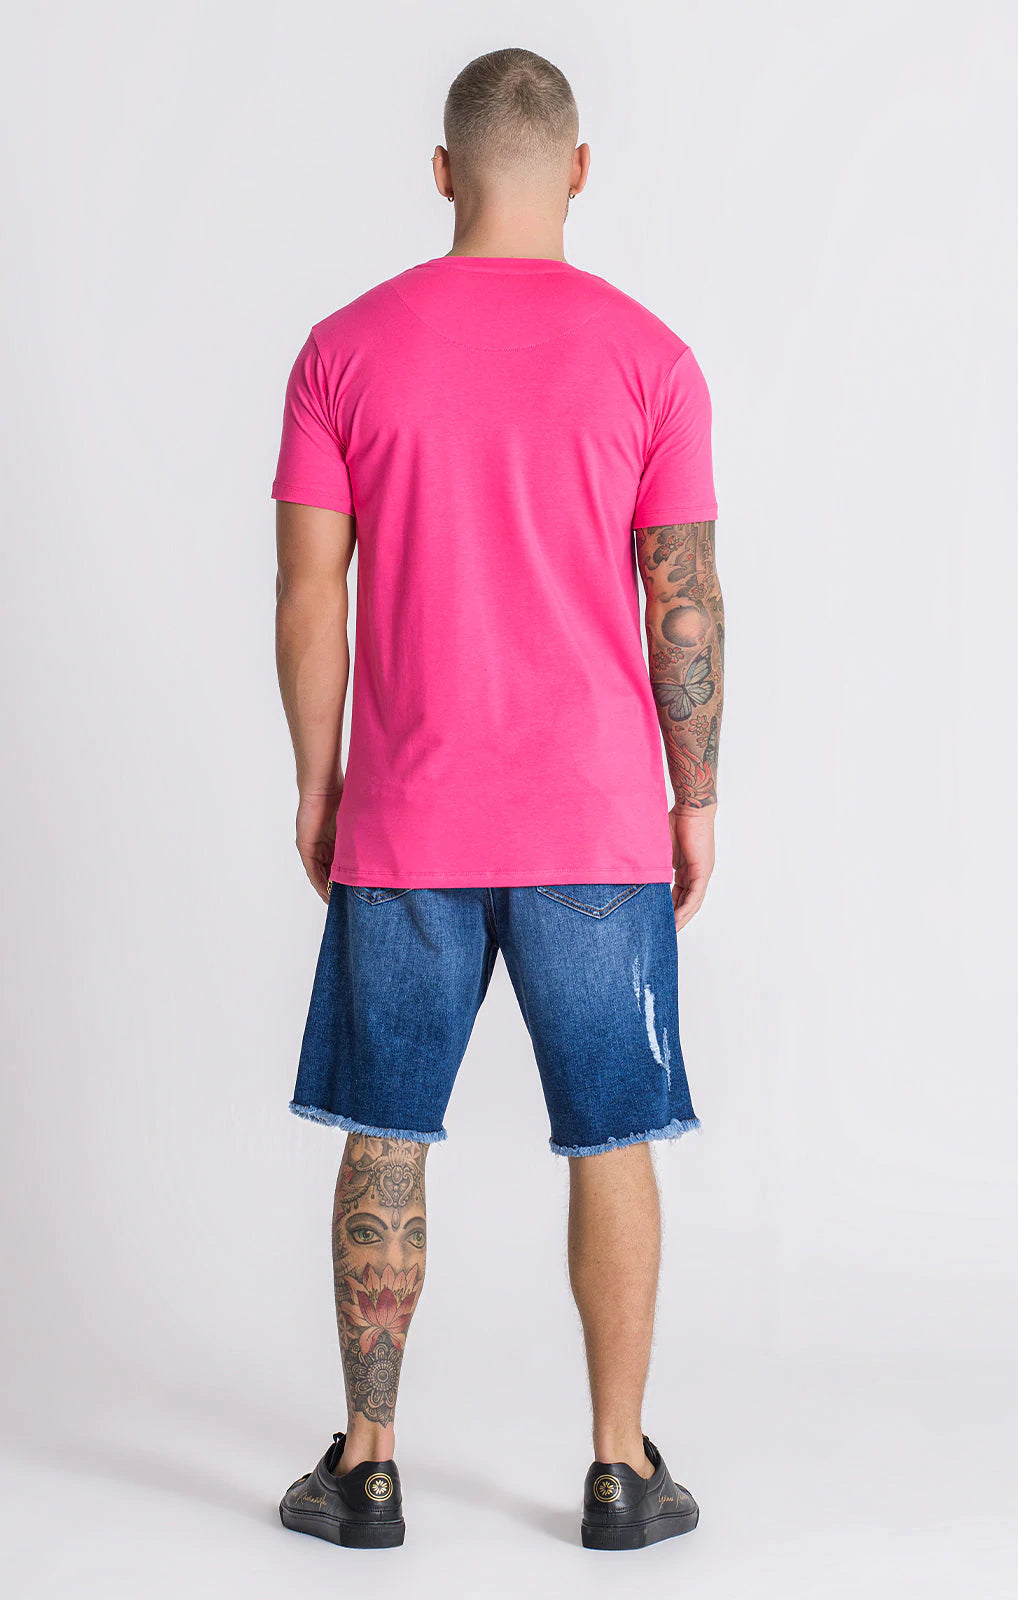 Camiseta KAVANAGH pink logo - GKM003071